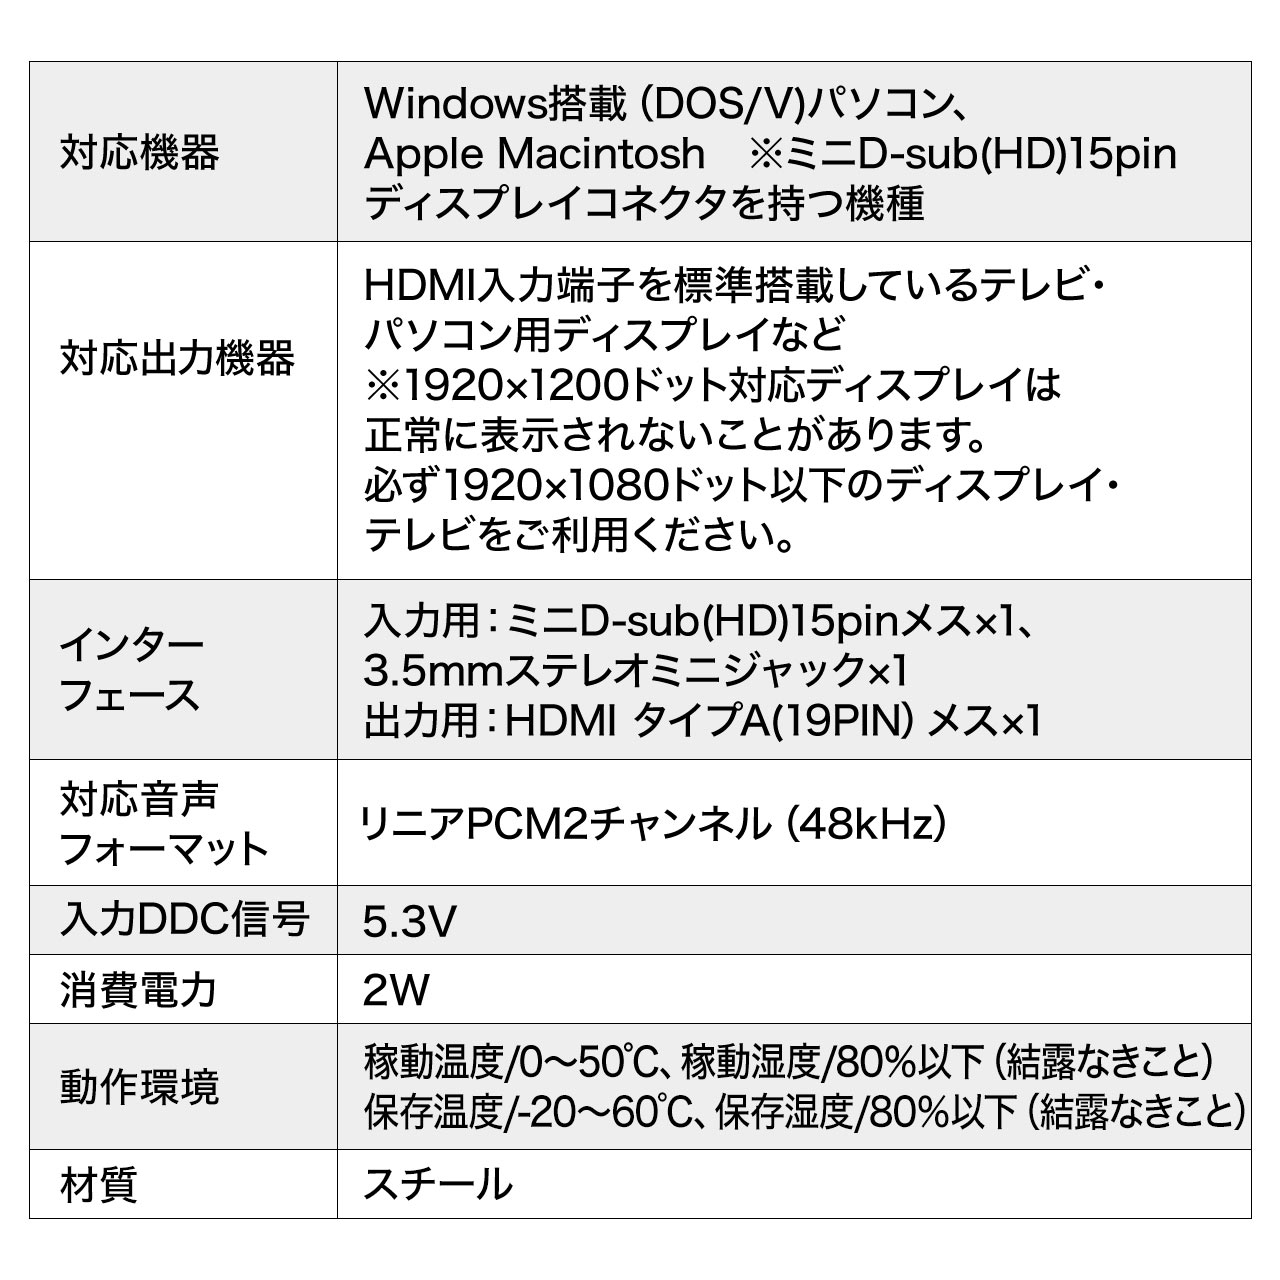 VGA to HDMIϊA_v^i~jD-sub15sEHDMIϊEo͂EXeI~jP[utj 400-VGA008